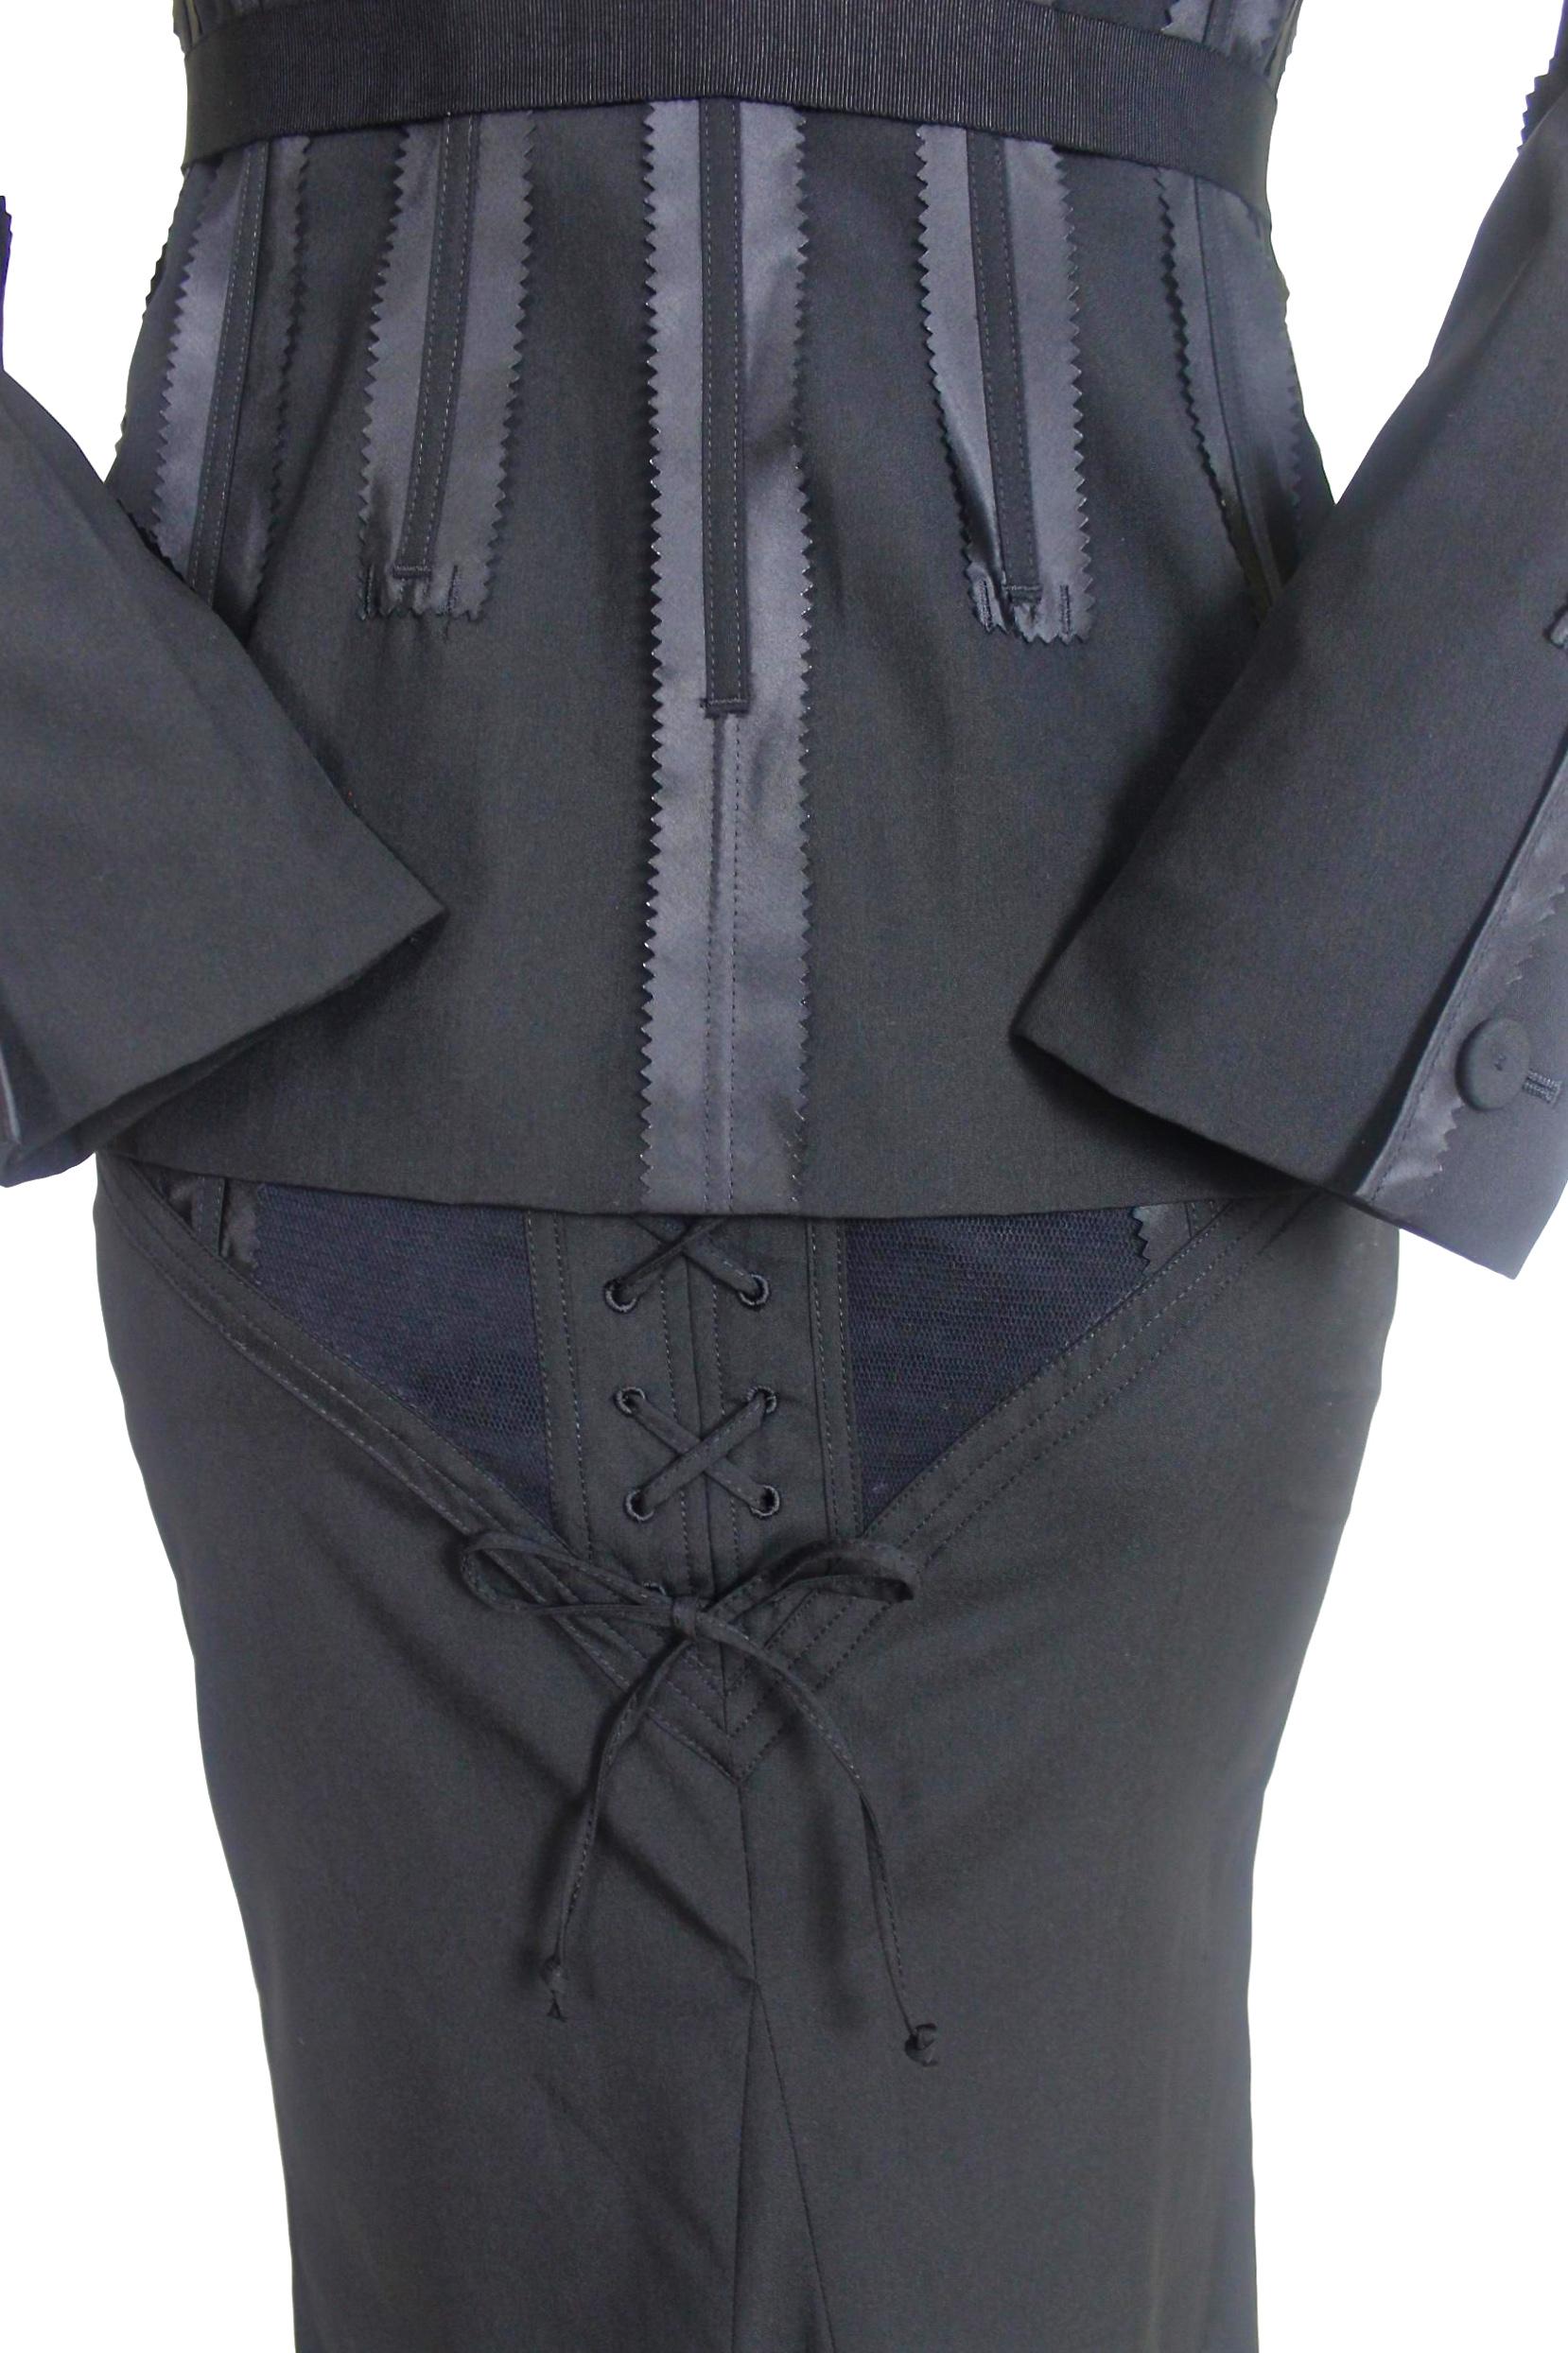 Black Jean Paul Gaultier 1990s Corset Jacket and Skirt Suit